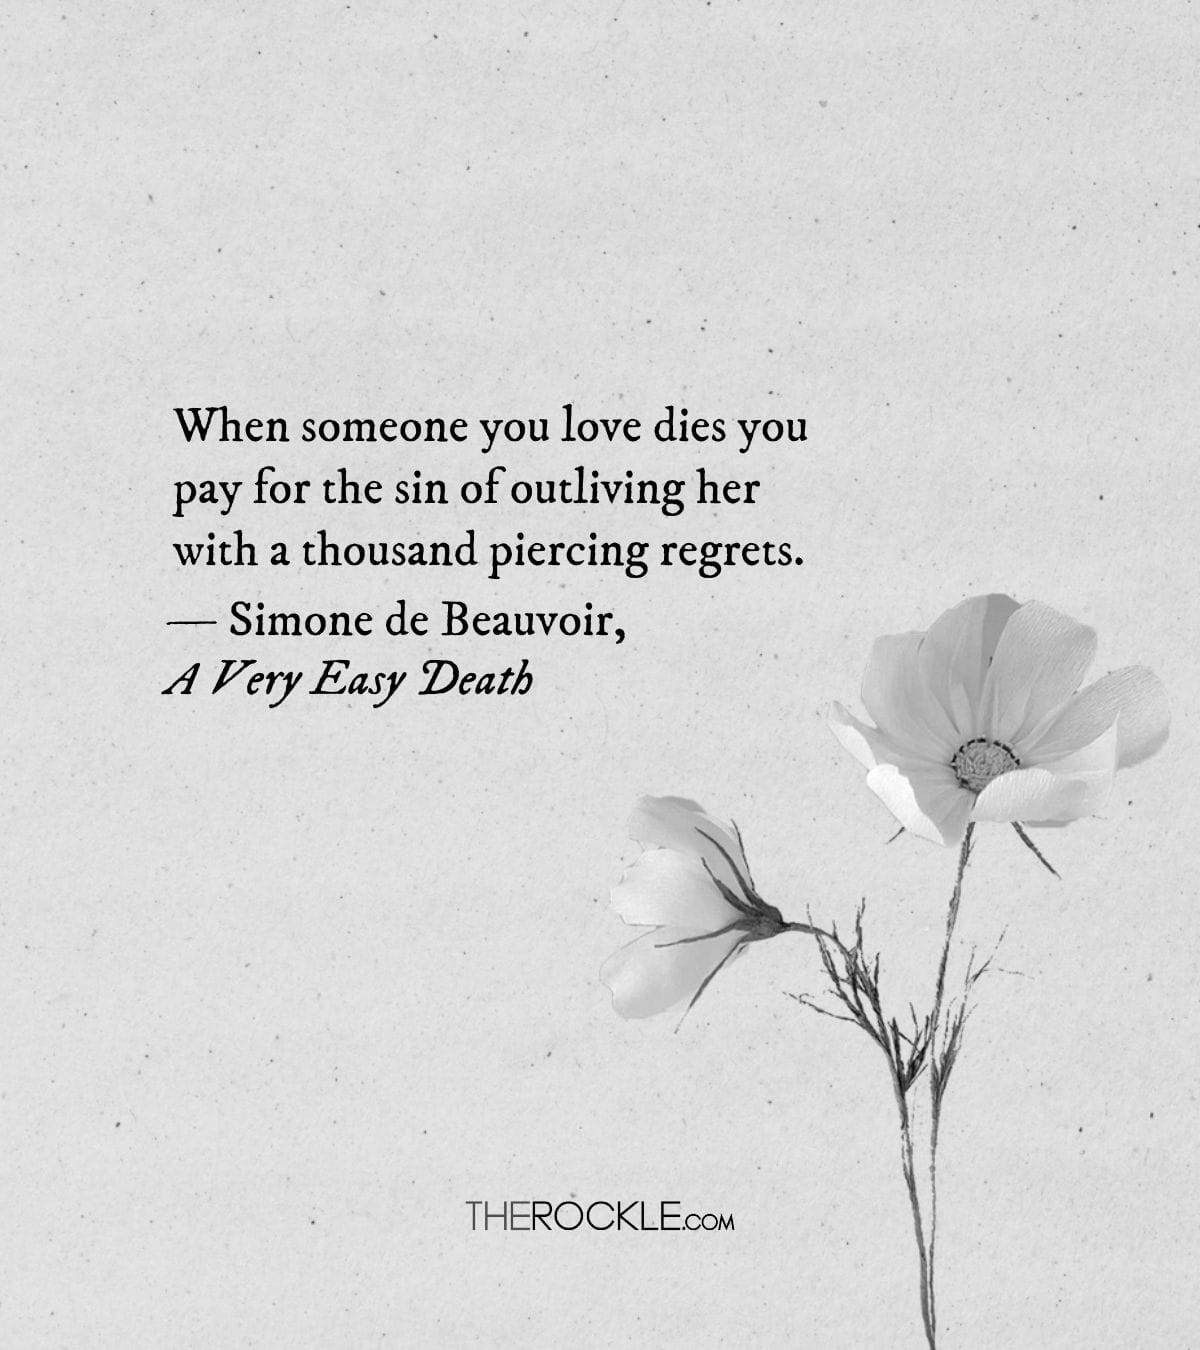 Simone de Beauvoir on guilt of outliving a loved one